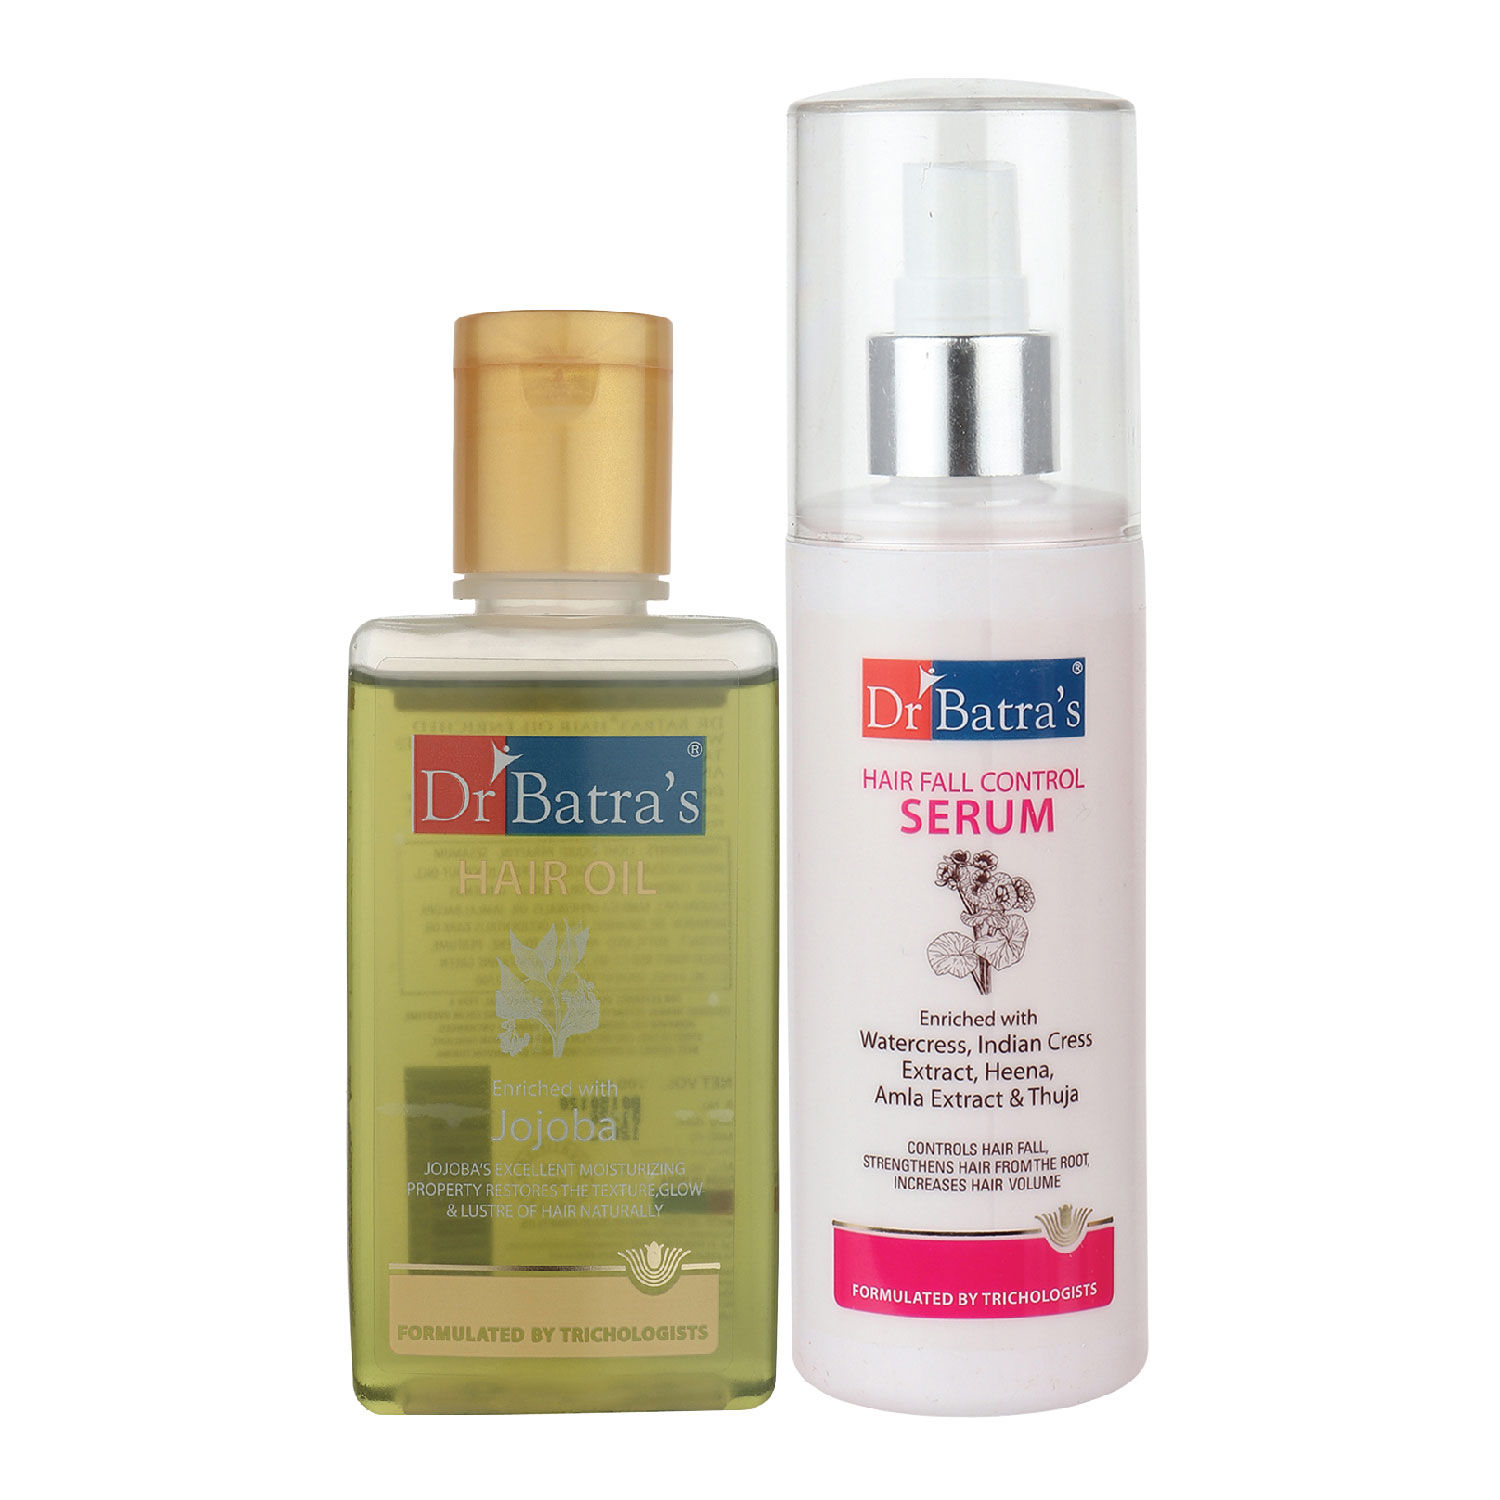 Dr Batras Anti Dandruff Hair Serum, Conditioner - 200 ml, Hair Fall Control  Oil- 200 ml and Dandruff Cleansing Shampoo - 100 ml (4 Items in the set) |  Dealsmagnet.com